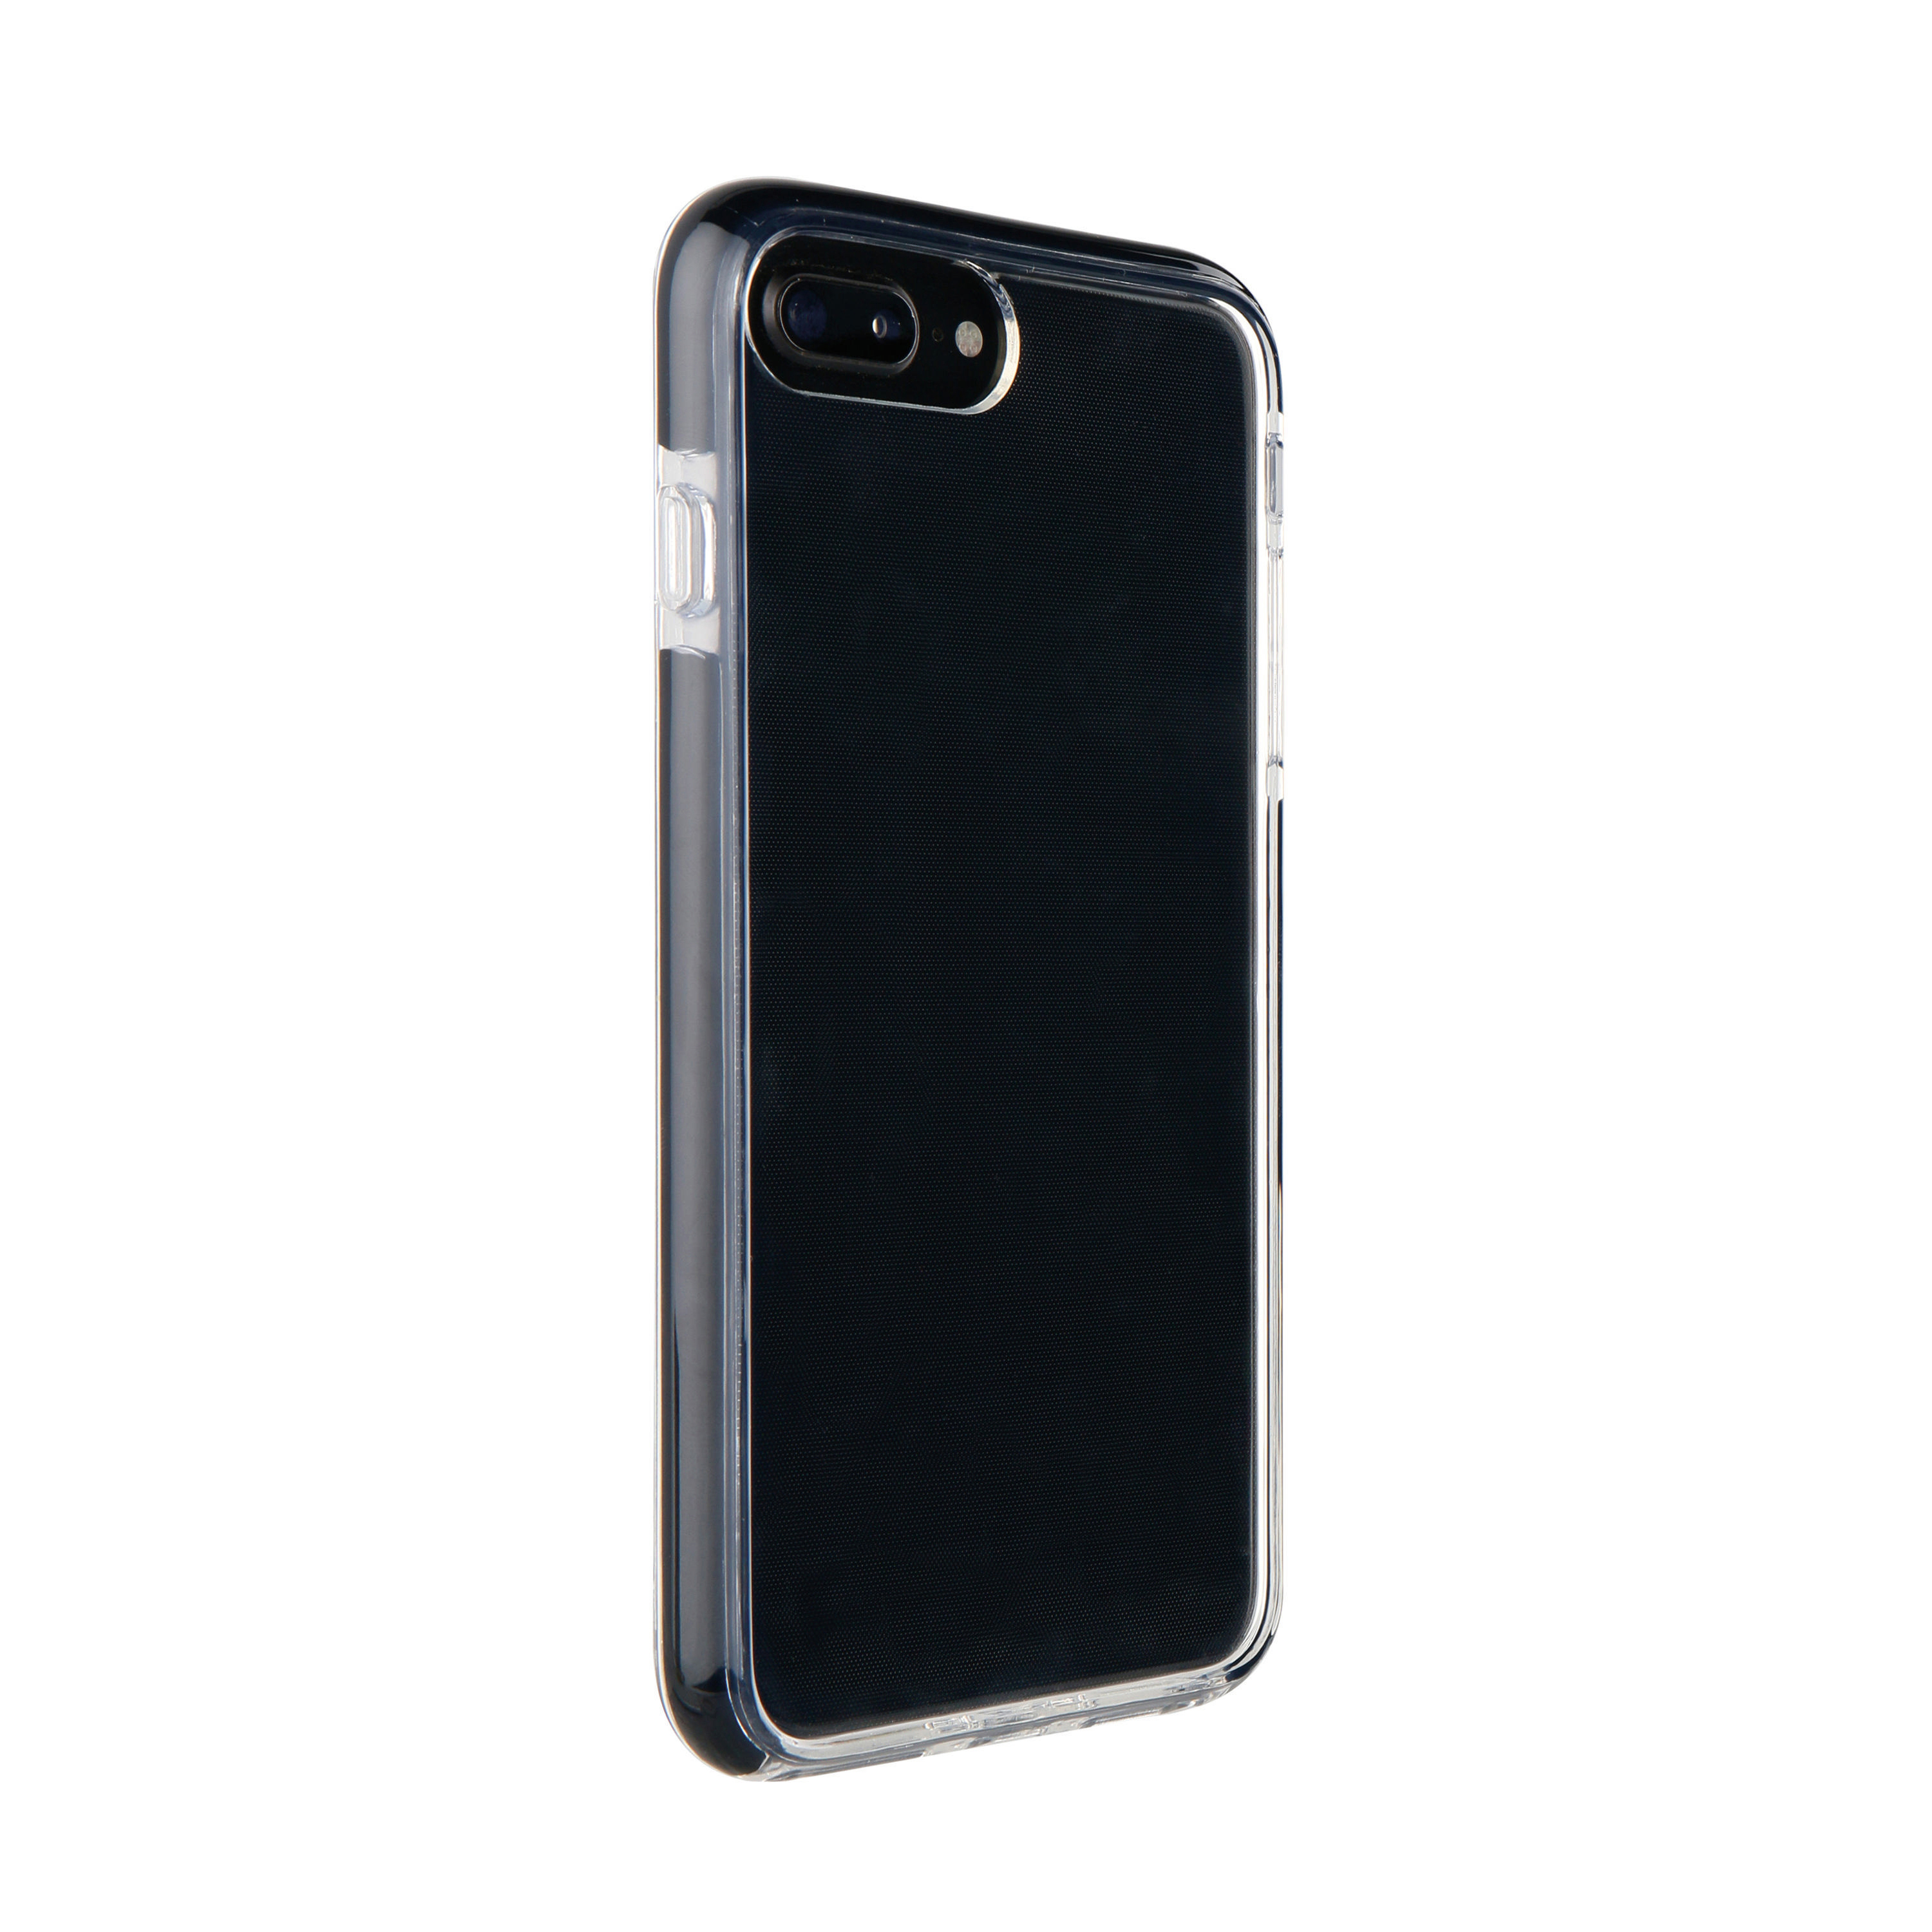 VIVANCO 61218 Transparent/Schwarz iPhone Rock iPhone Backcover, 8, Apple, Plus, 6S iPhone Solid, 7